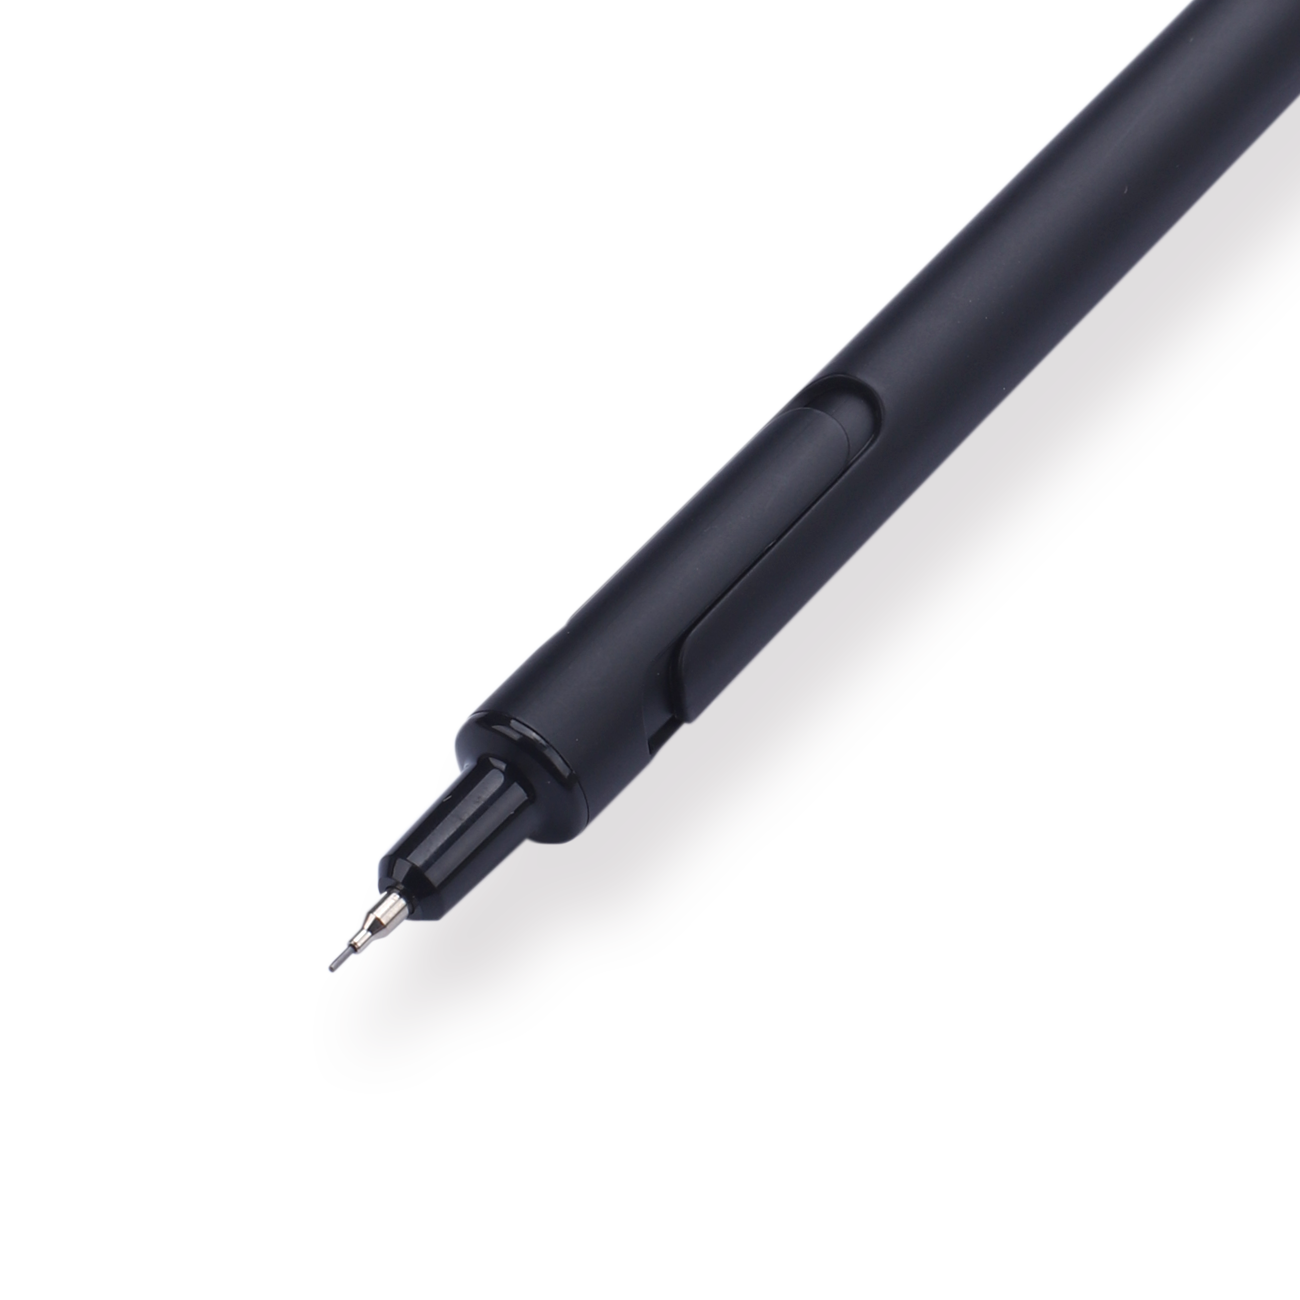 Sun-Star Topull S Mechanical Pencil - 0.5 mm - Black - Stationery Pal